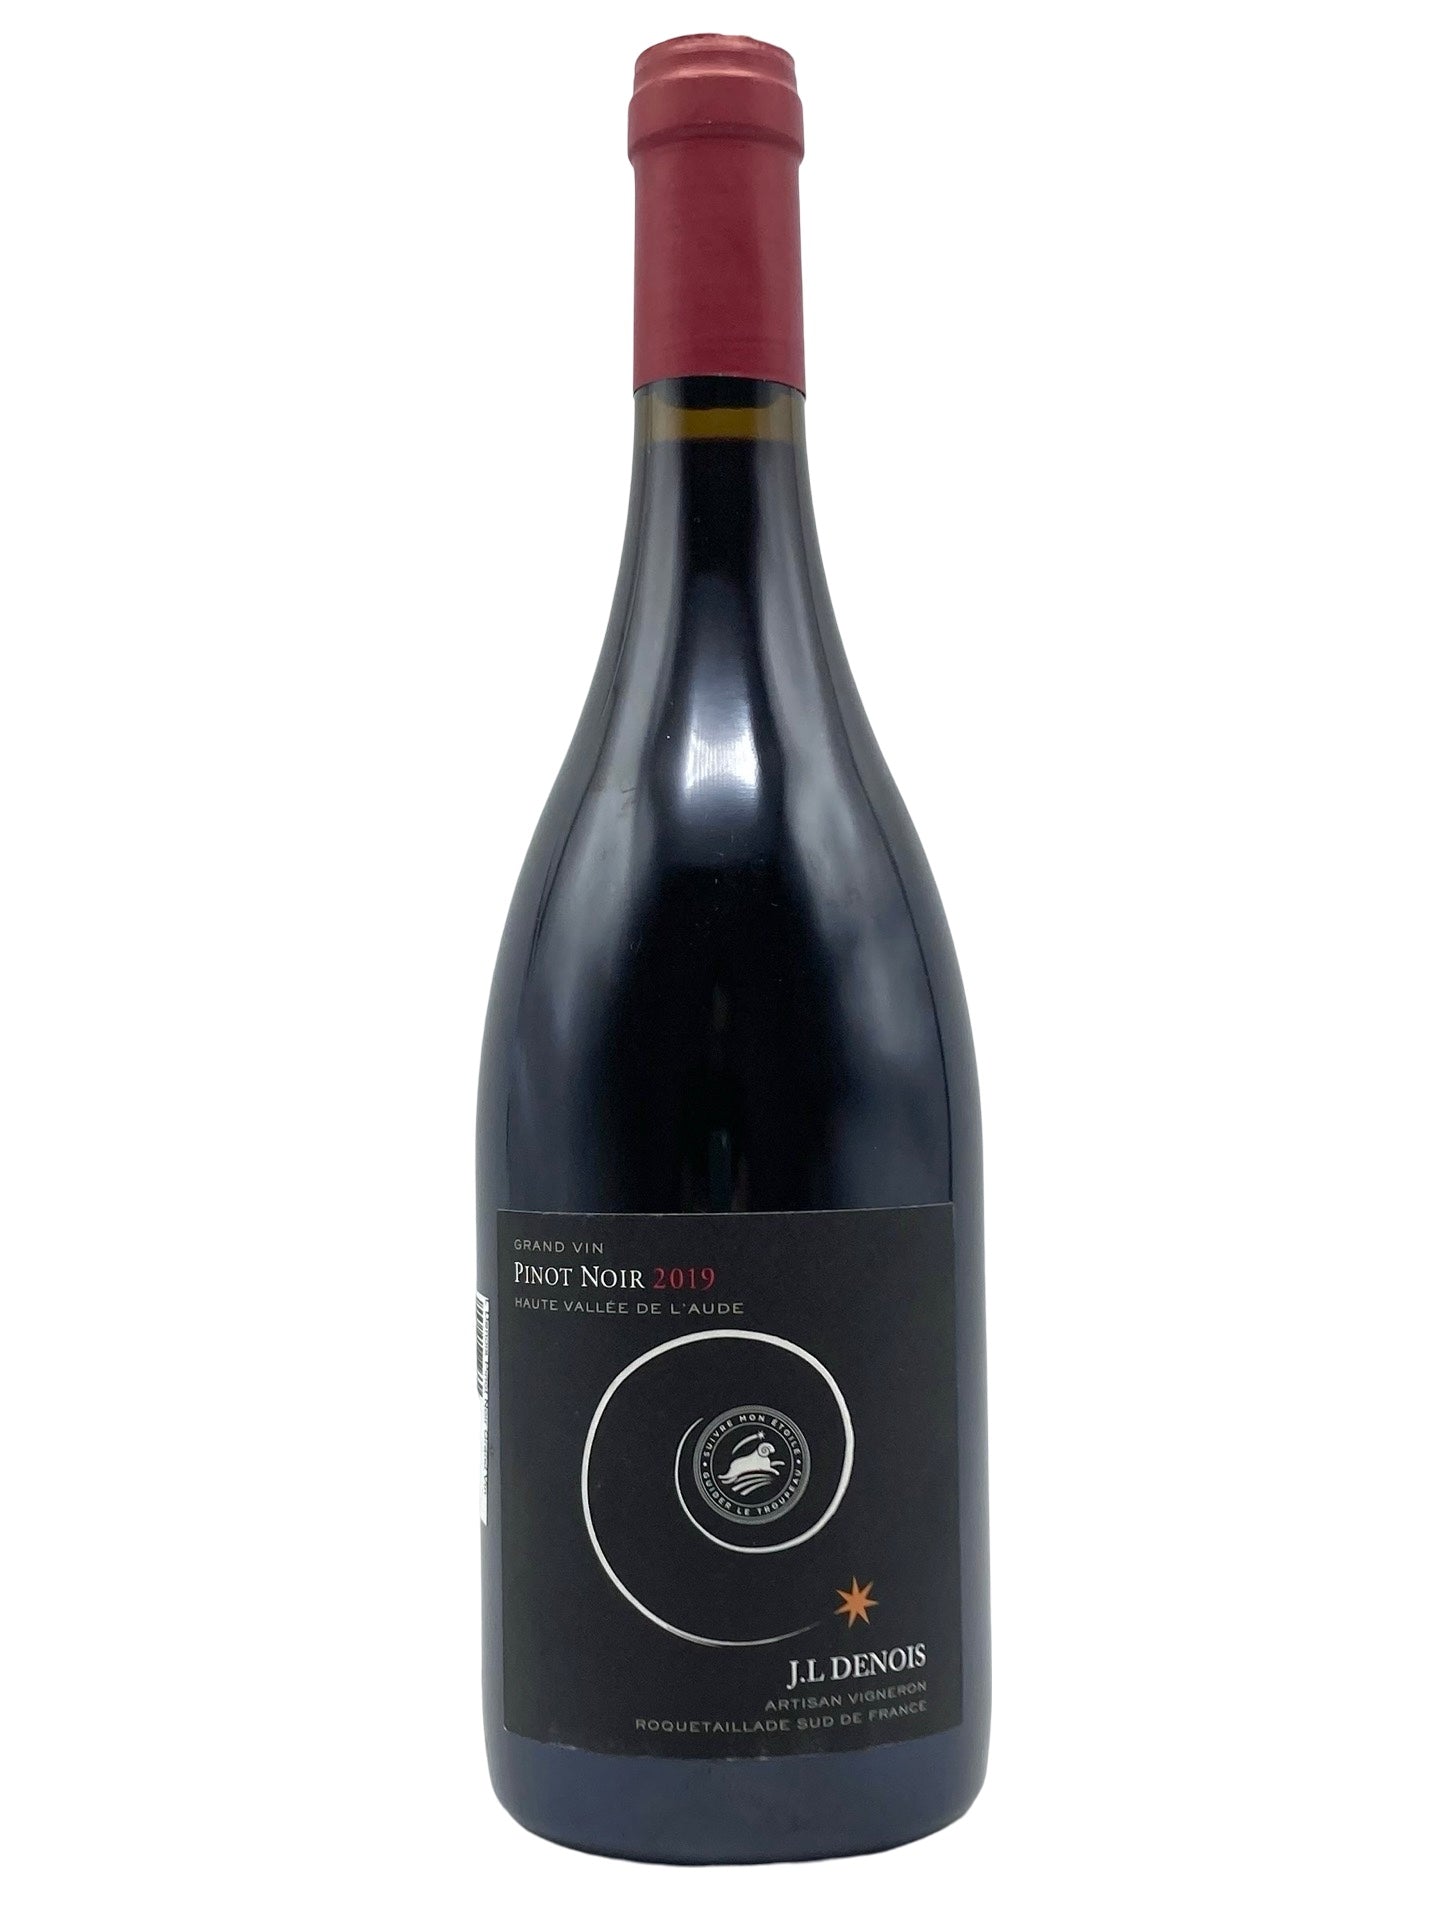 JL Denois Pinot Noir Grand Vin